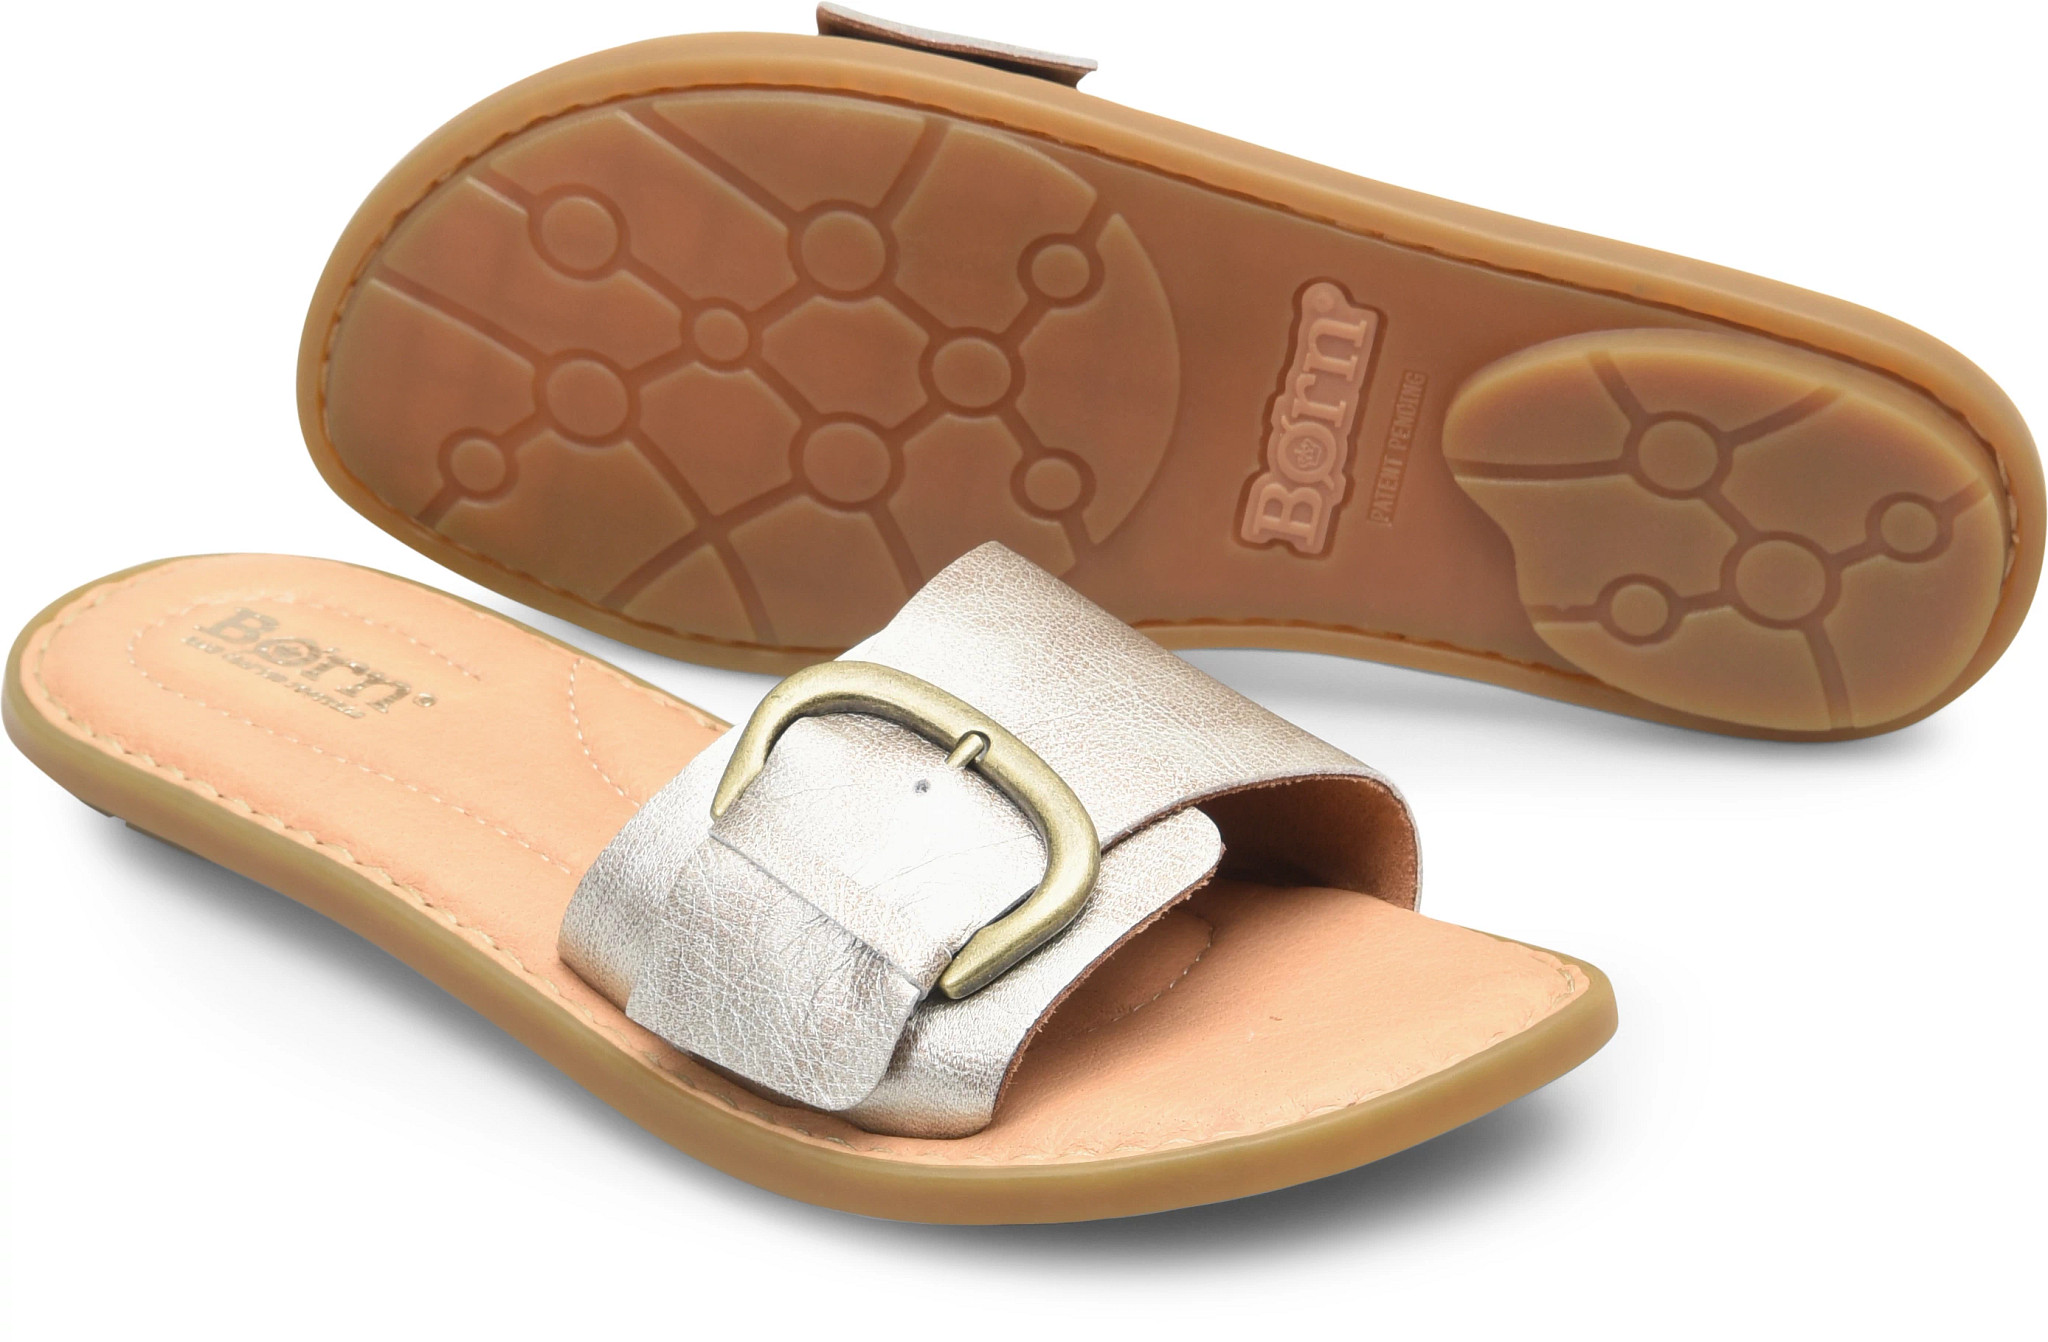 InnovativeVersionSin Summer Comfort Wedges Sandals Woman Retro Flip Flops Ladies Shoes 2019 Fashion Flat Sandals Women Shoes Creamy White